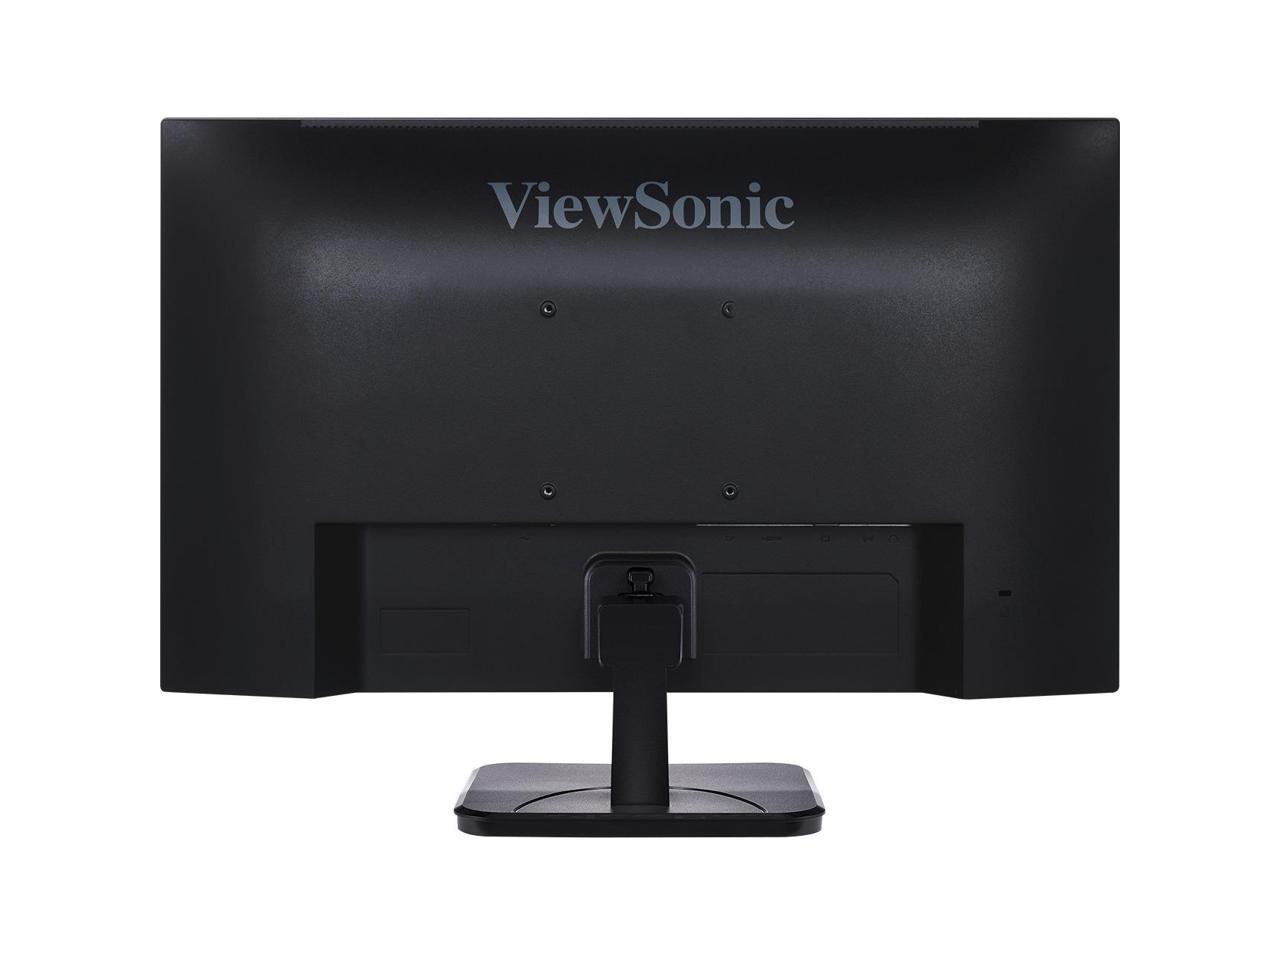 Viewsonic VA2456-MHD 24" (Actual size 23.8") Full HD 1920 x 1080 5ms (GTG W/OD) VGA HDMI DisplayPort Built-in Speakers Anti-Glare Backlit LED IPS Monitor